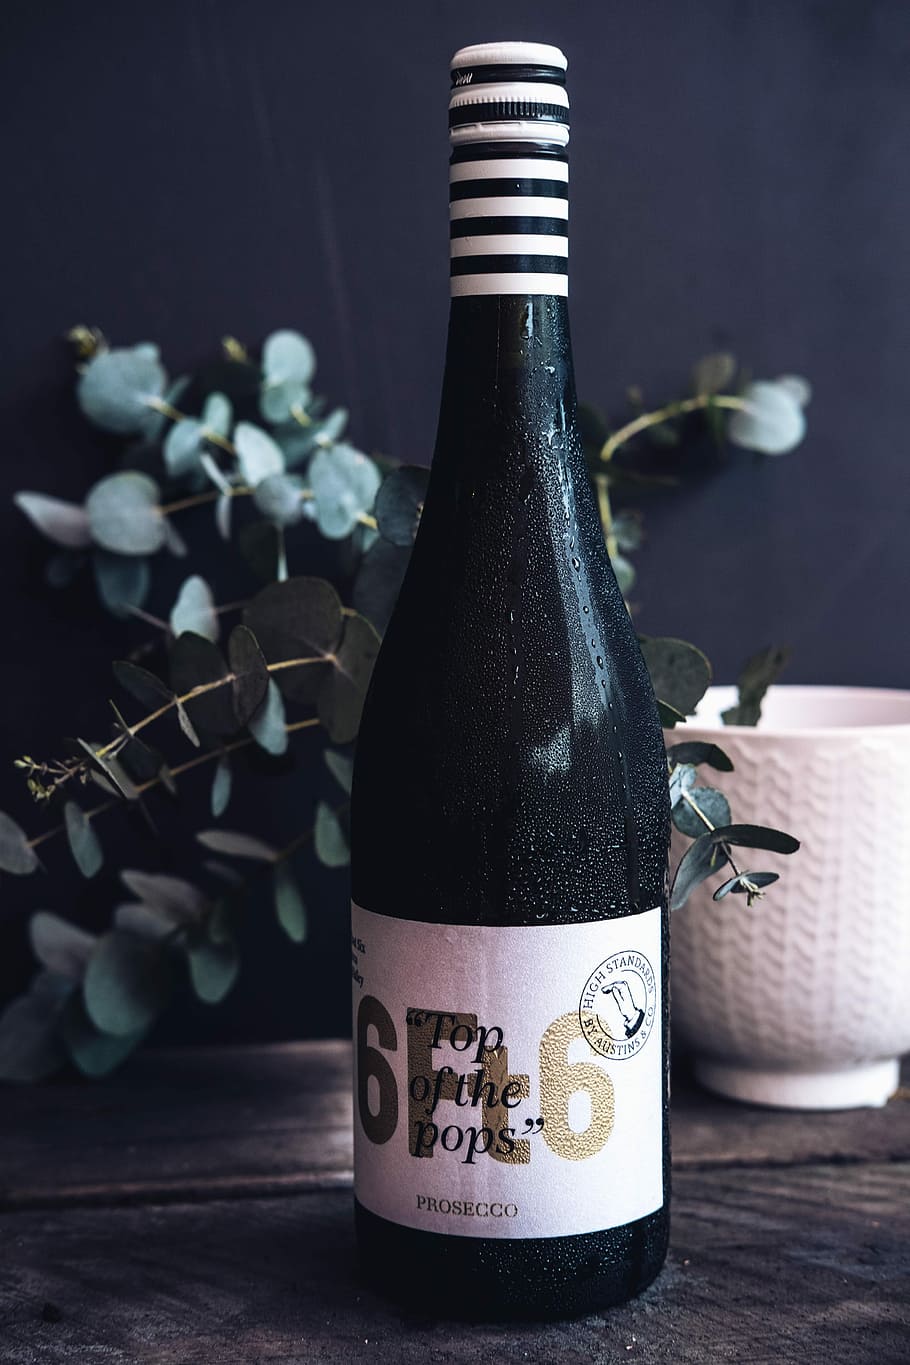 Prosecco wine bottle on table, black wine bottle near vase, eucalyptus